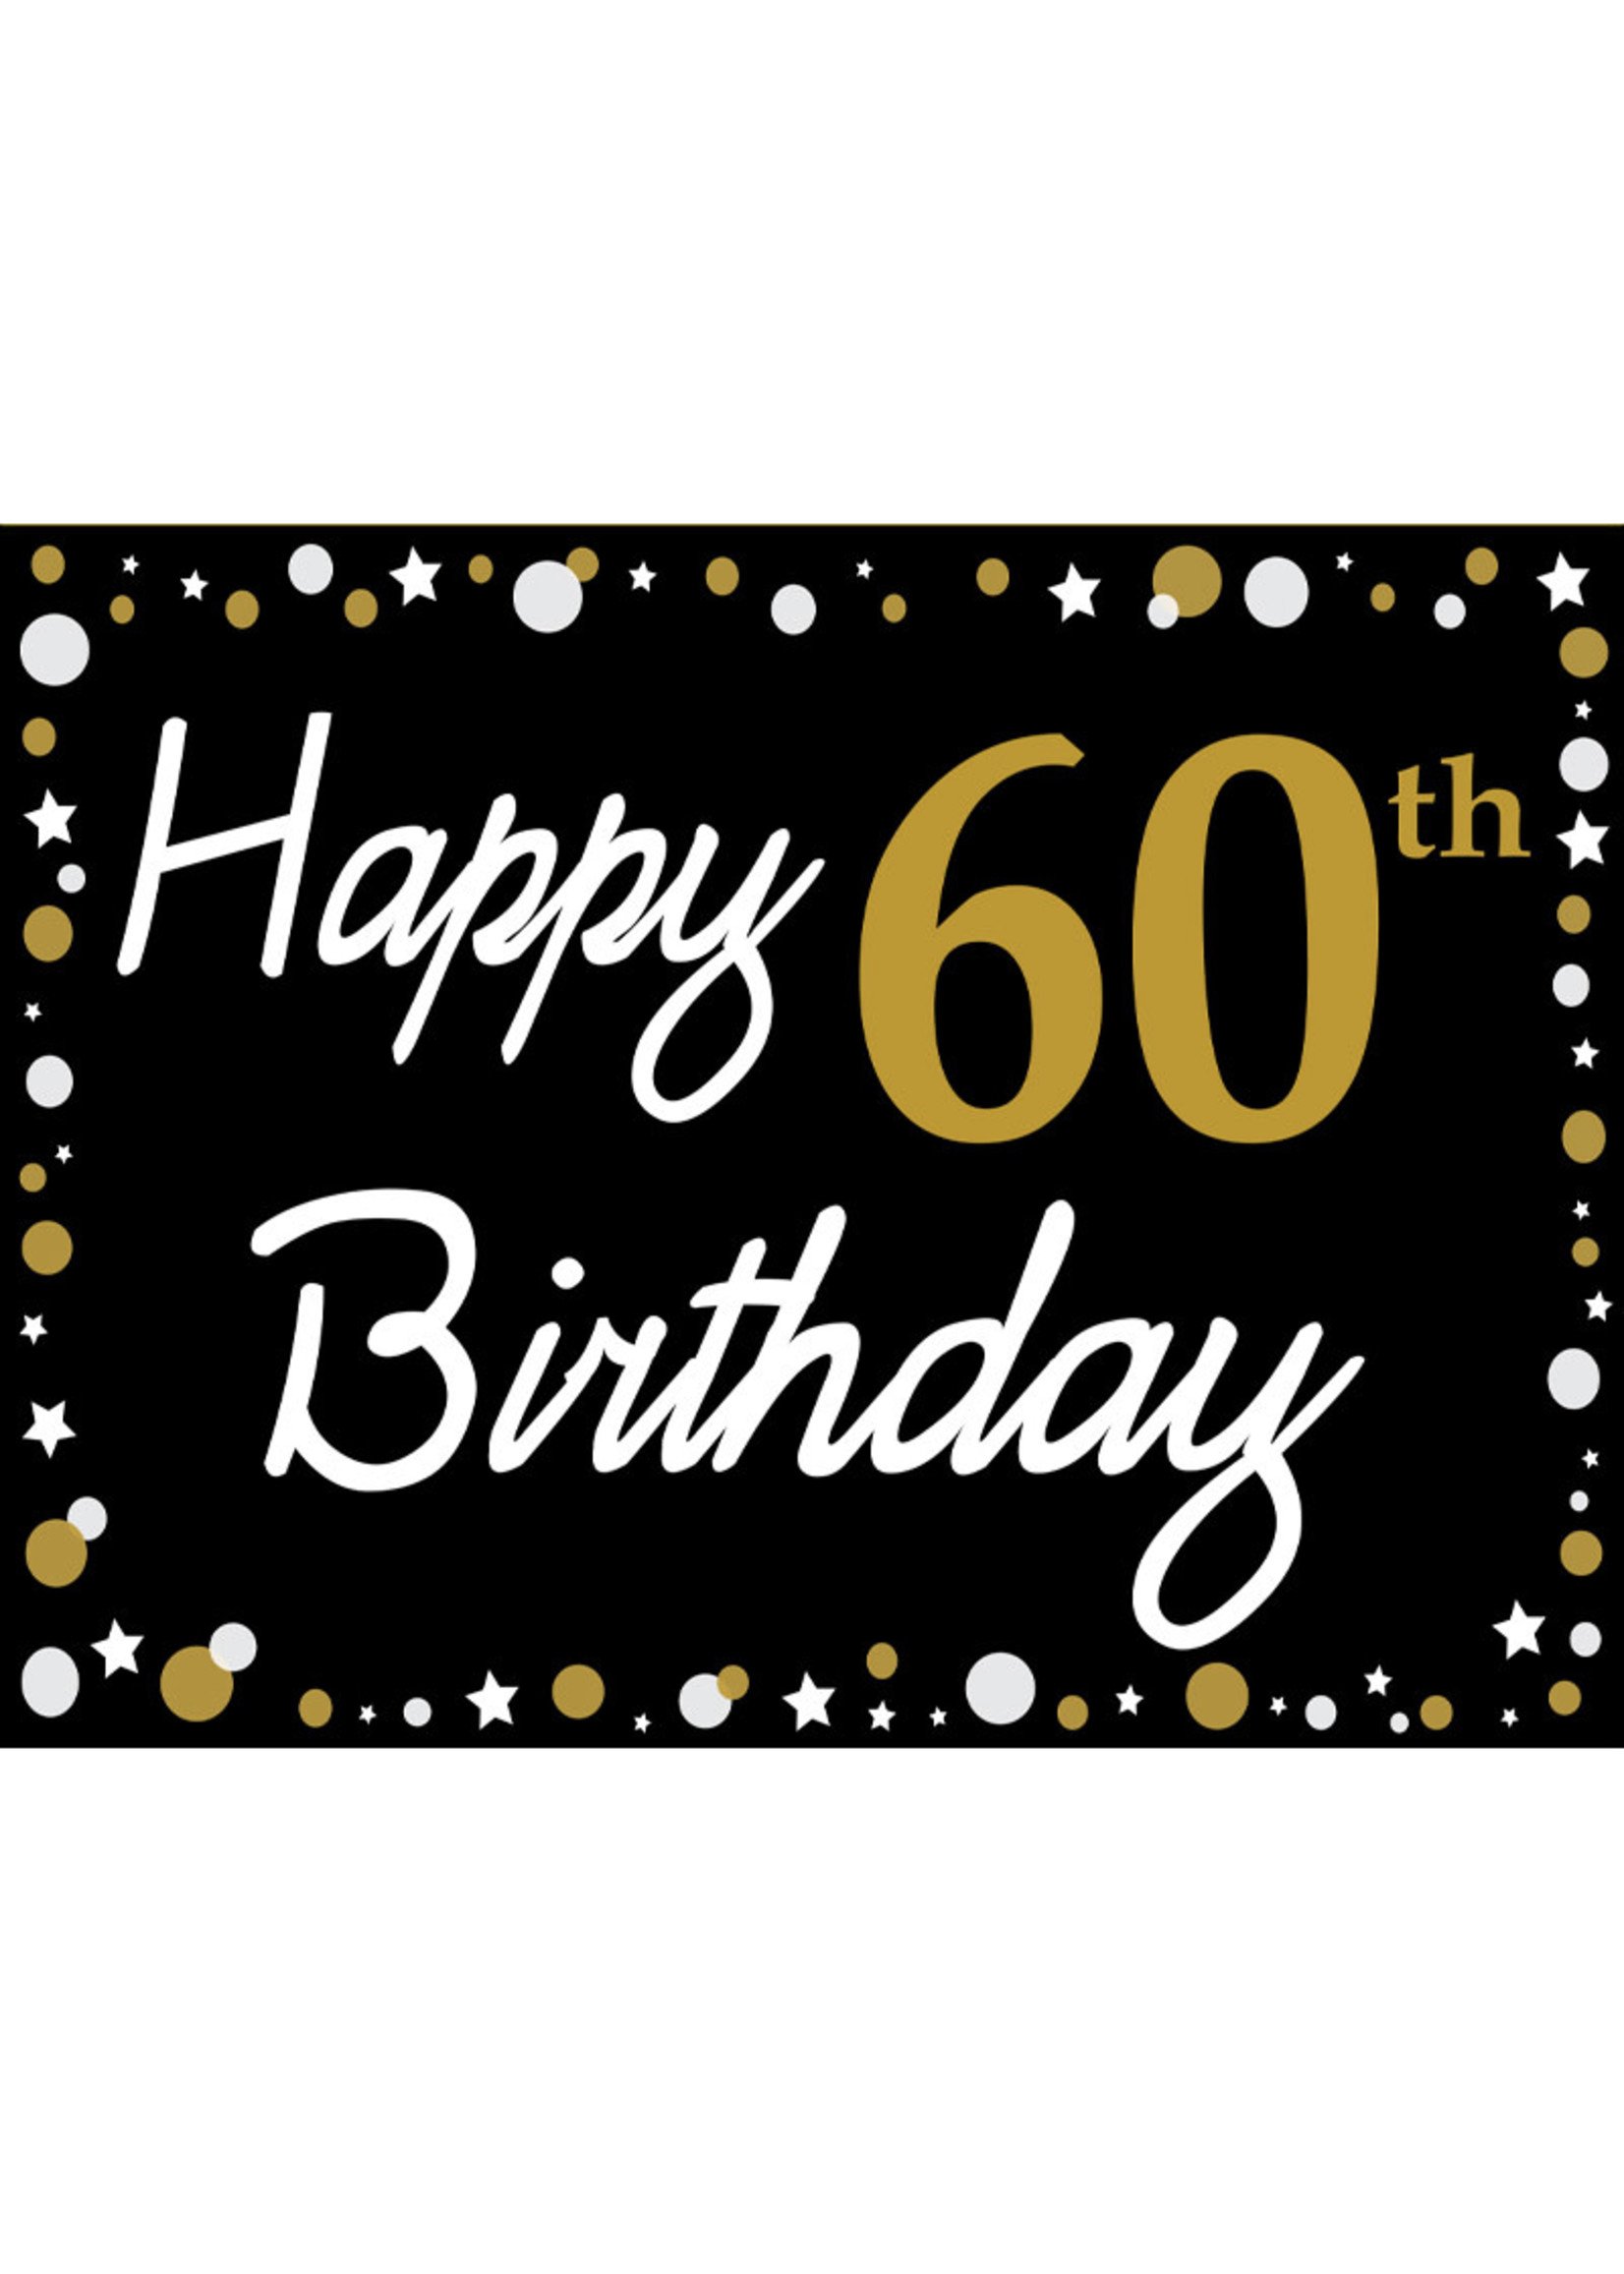 Happy 60th Birthday - Black, Gold & White Yard Sign